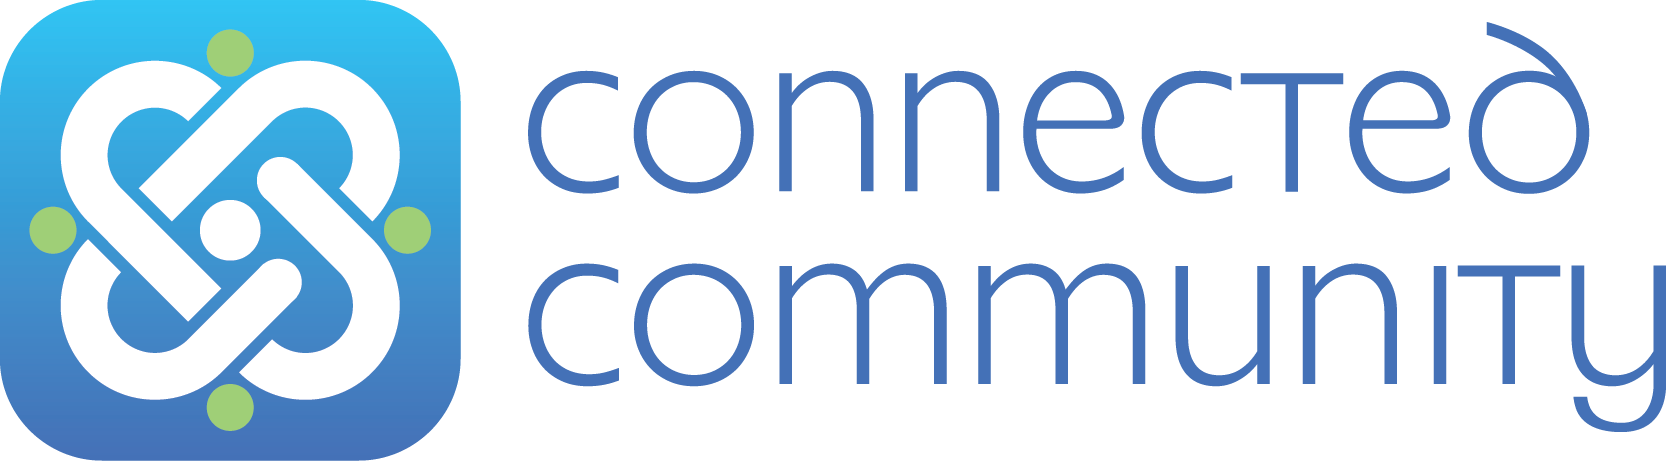 Llanrhian Connected Community